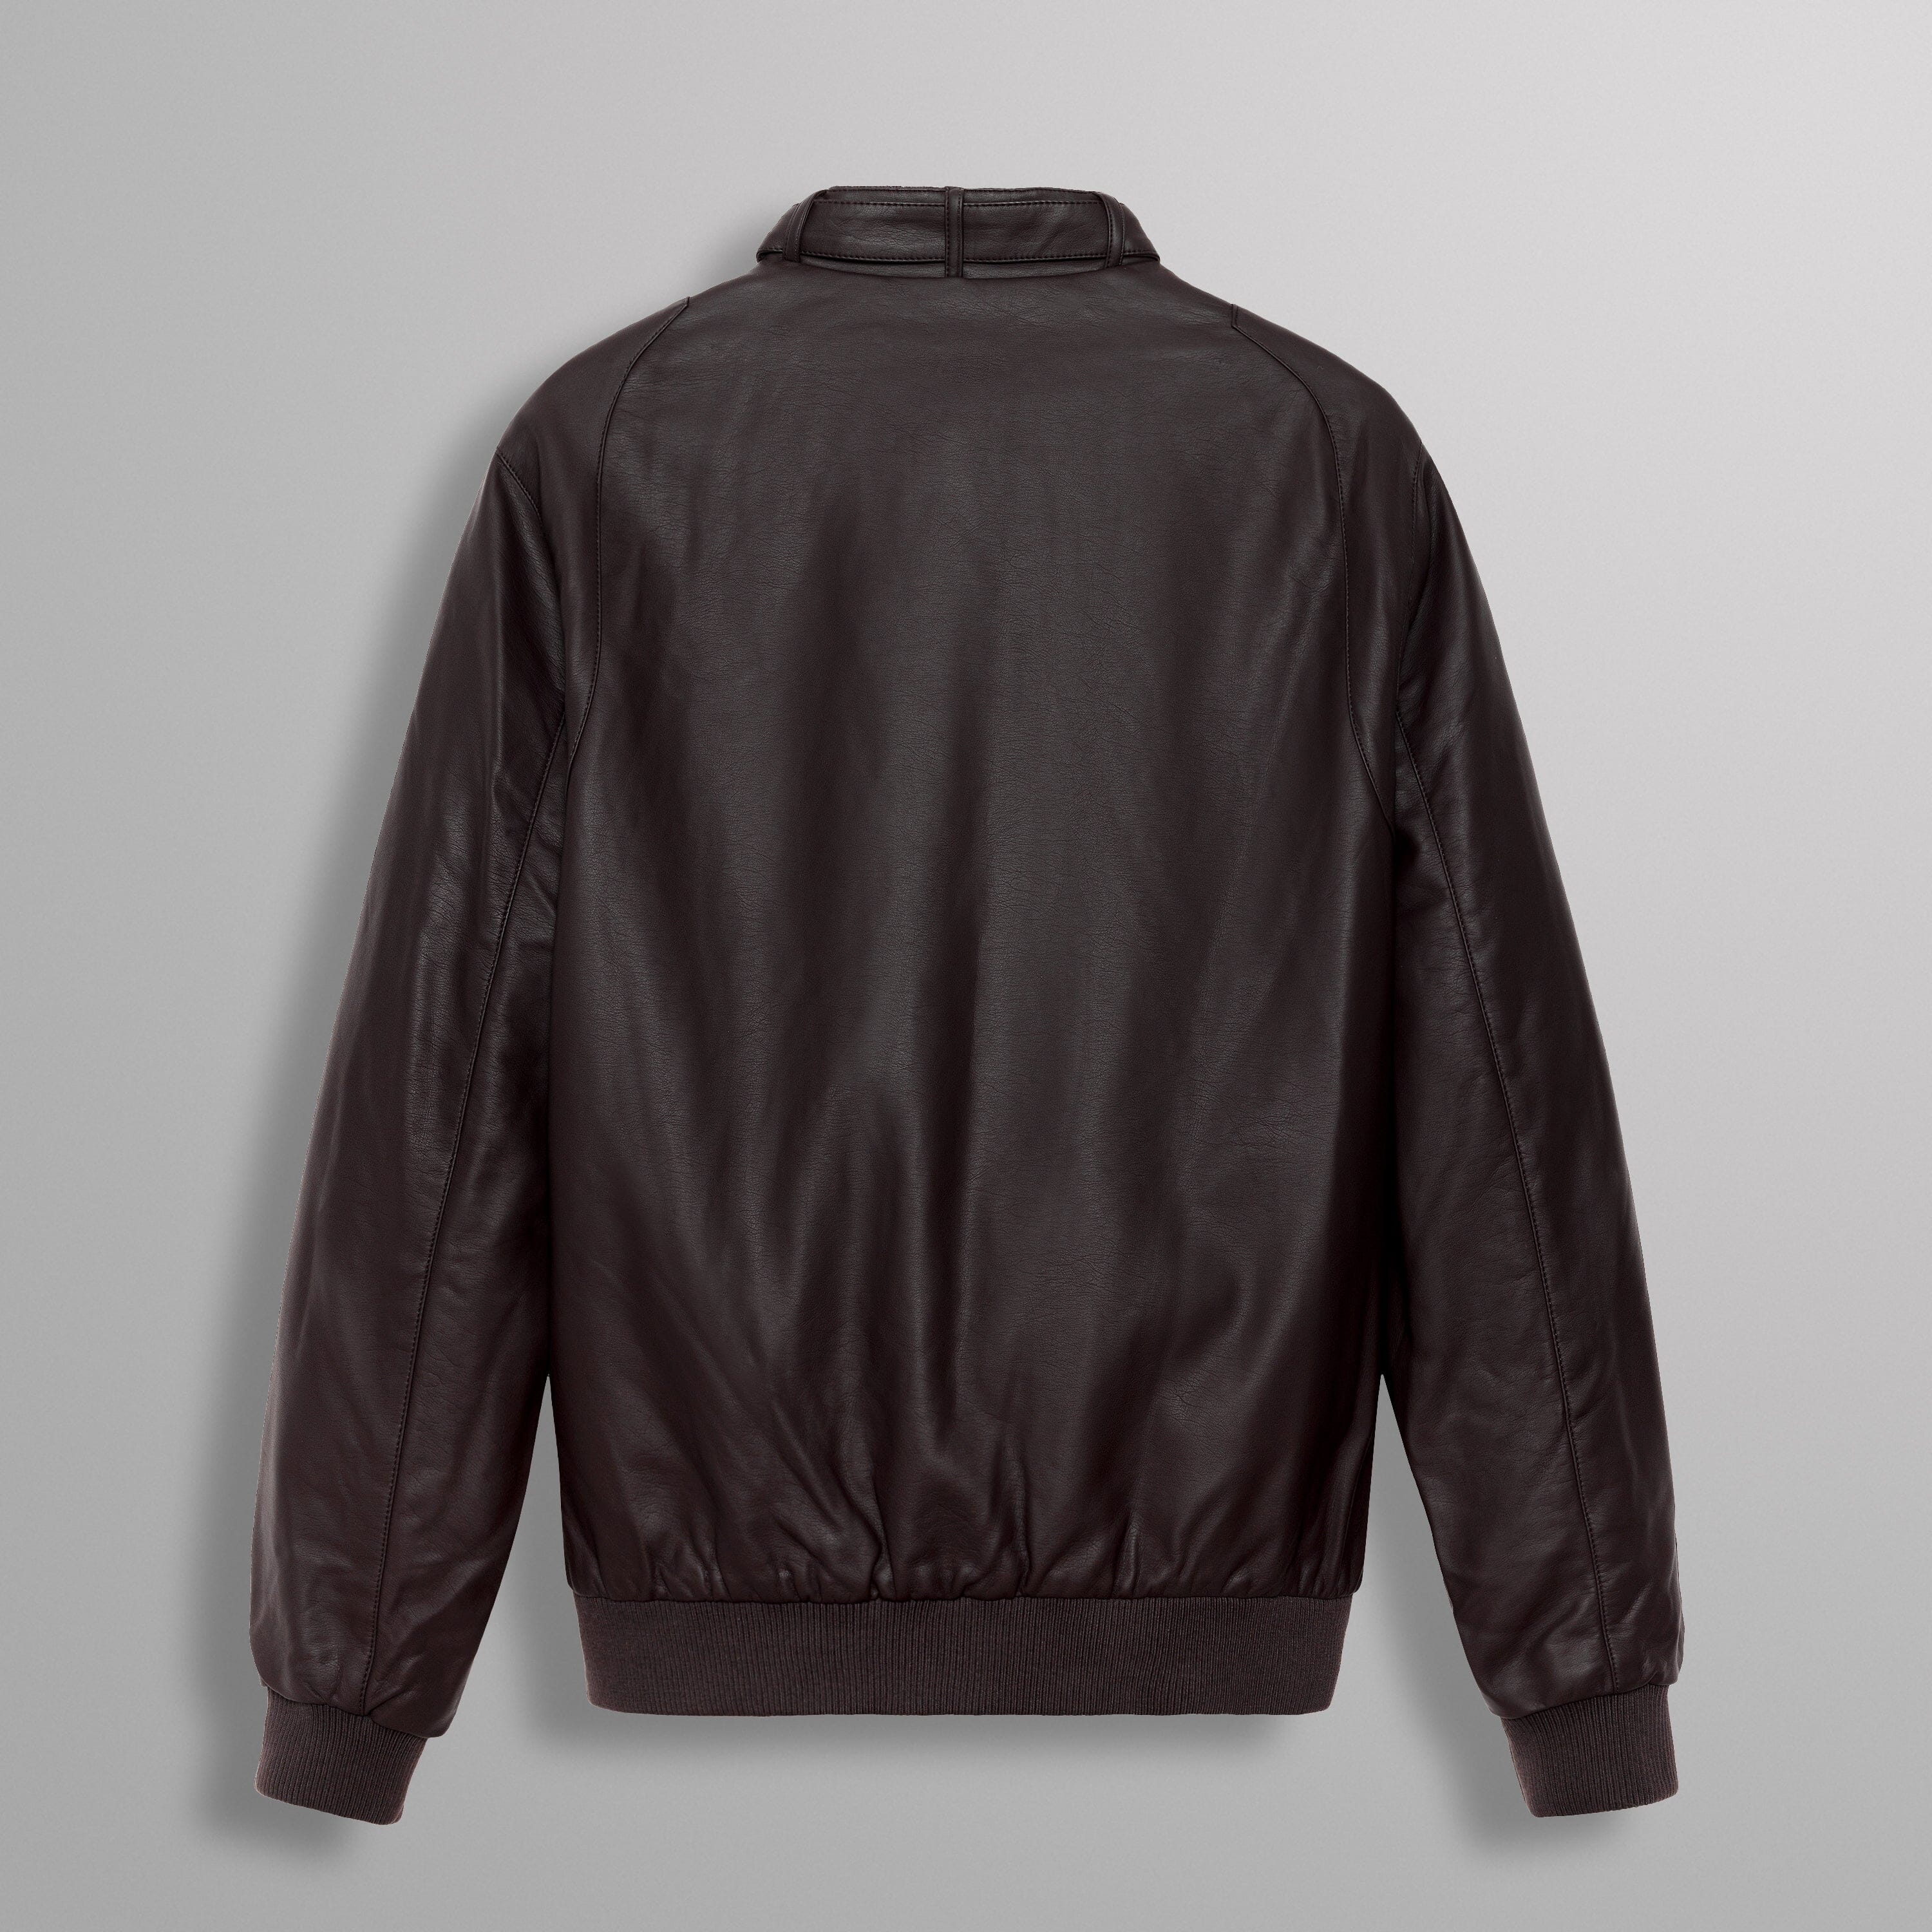 Women’s Leather Jacket Style 8800